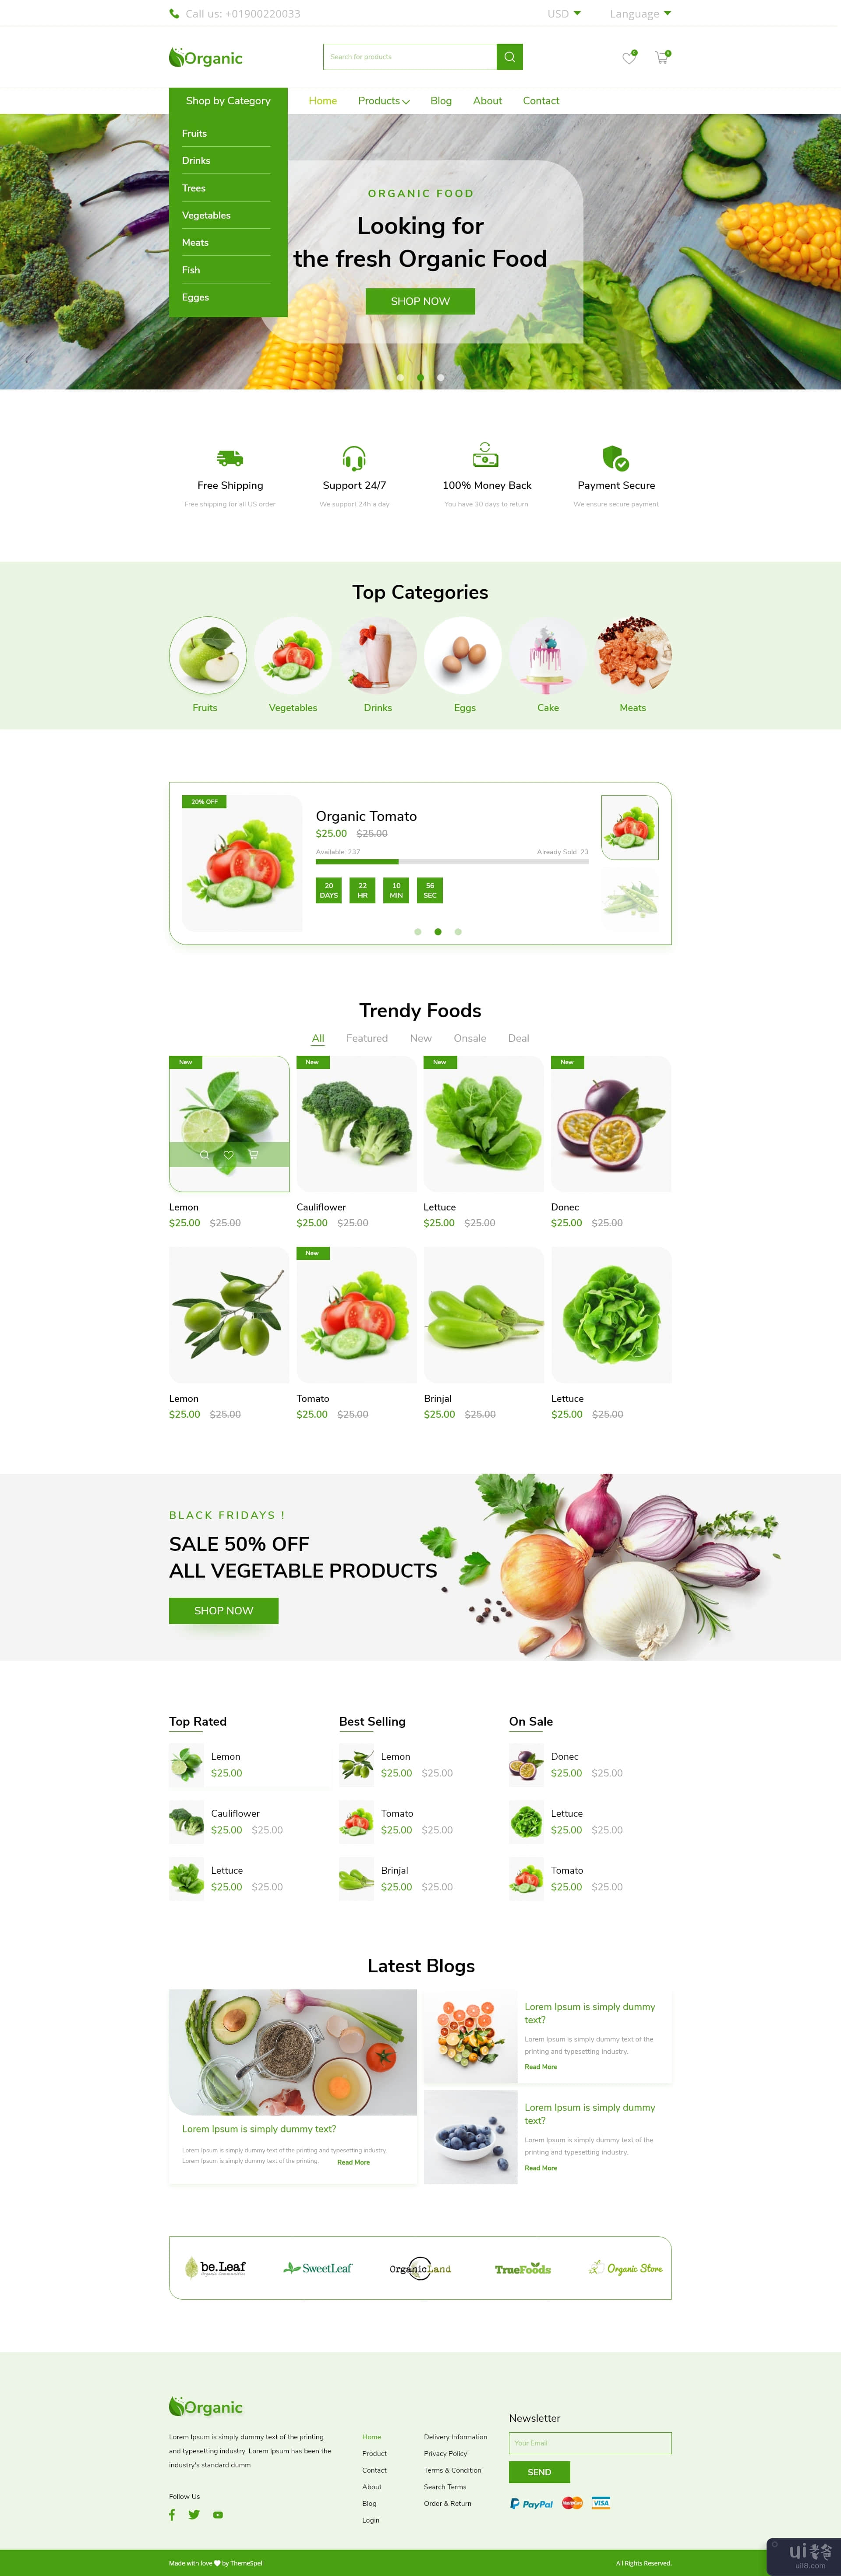 有机-有机食品网站UI设计(Organic-Organic Food Website UI Design)插图